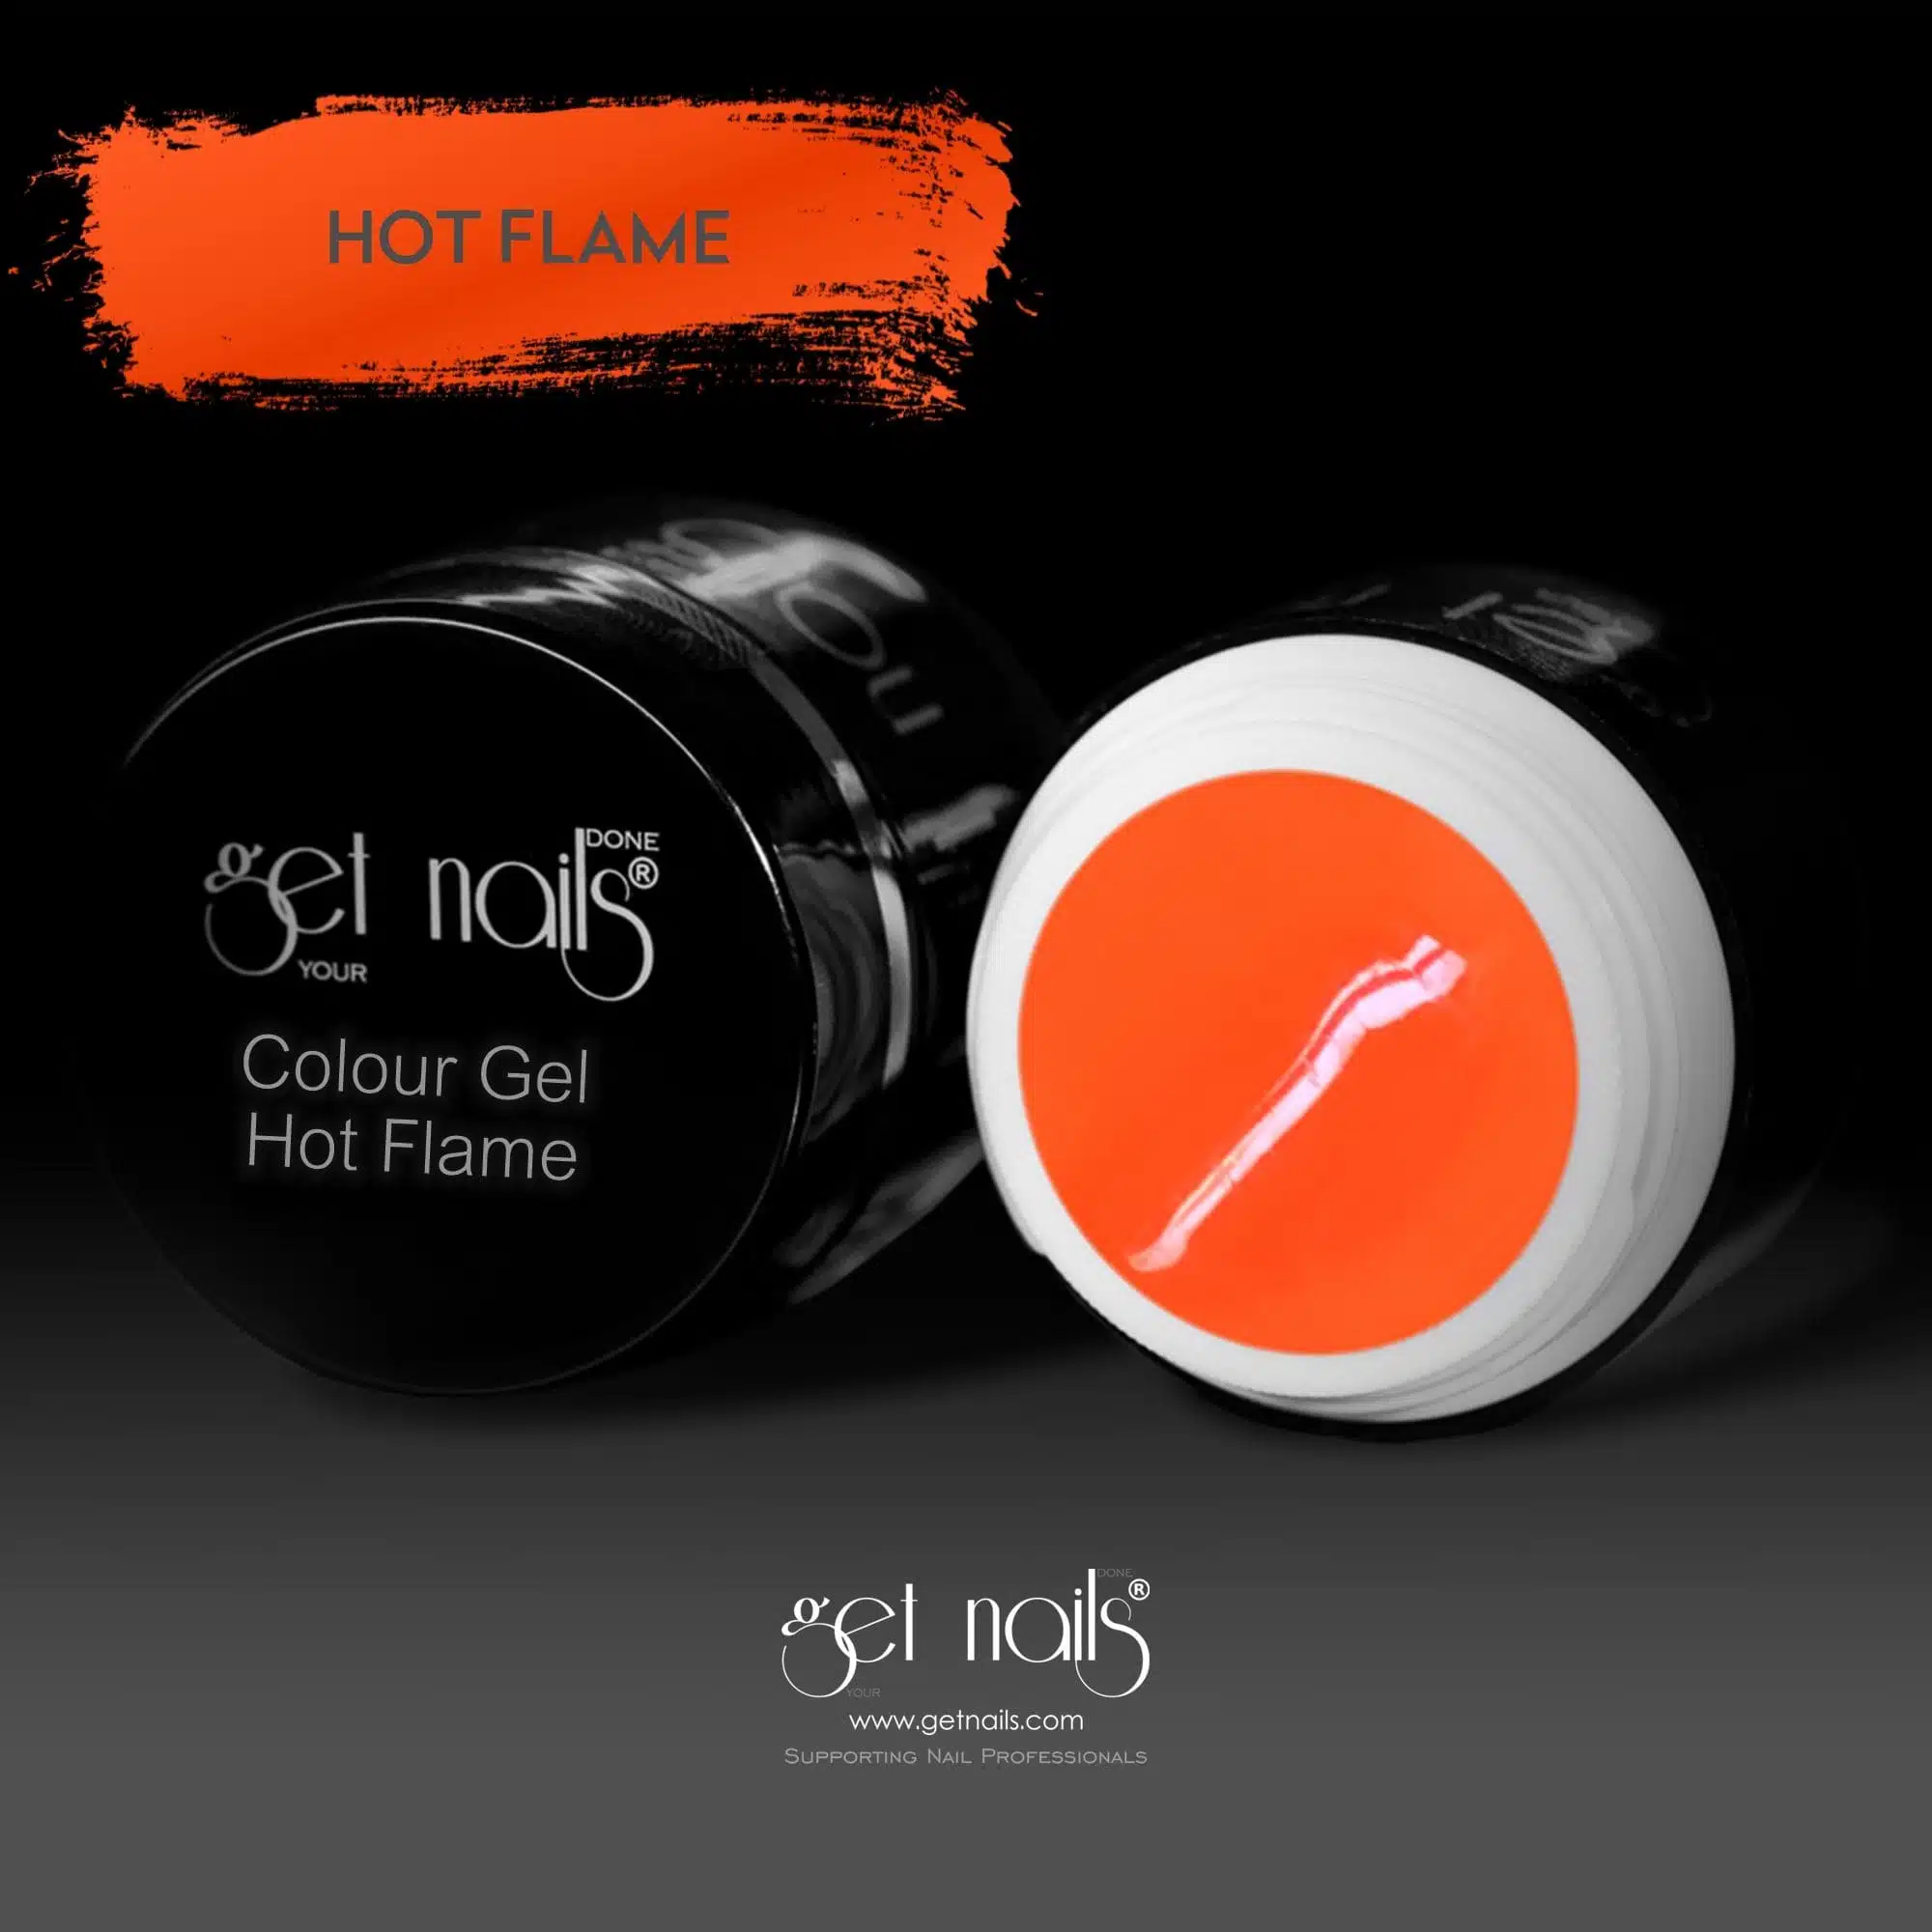 Get Nails Austria - Gel colorato Hot Flame 5g